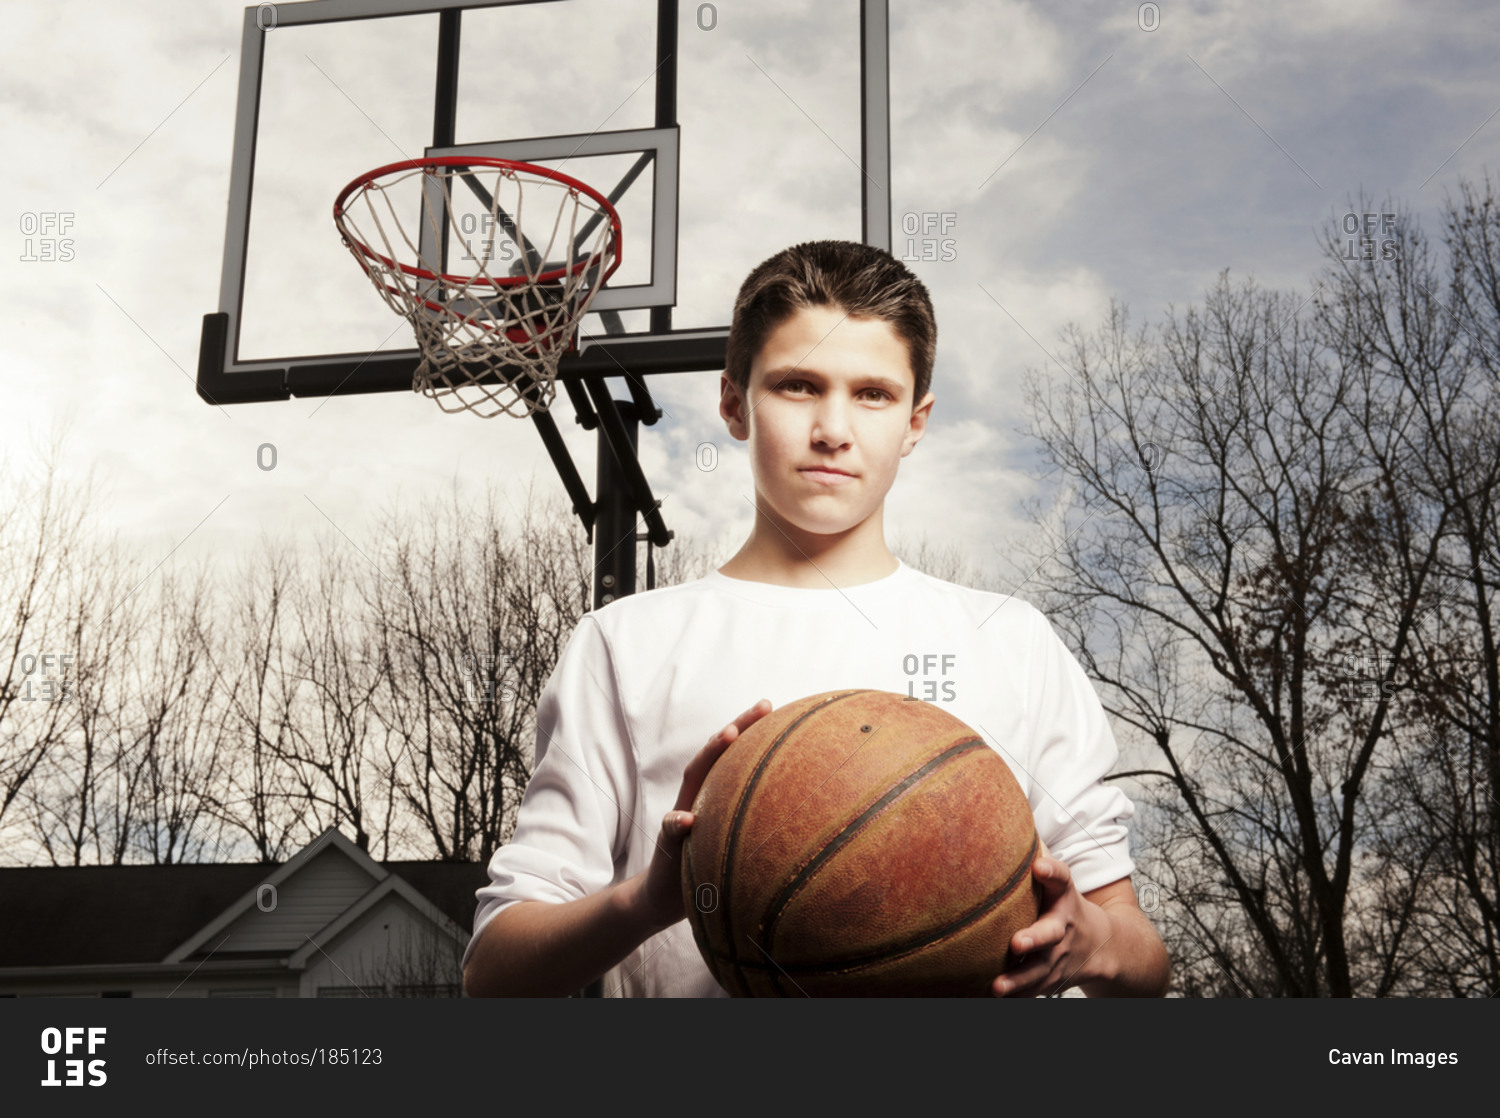 Portrait of teenage boy with a basketball